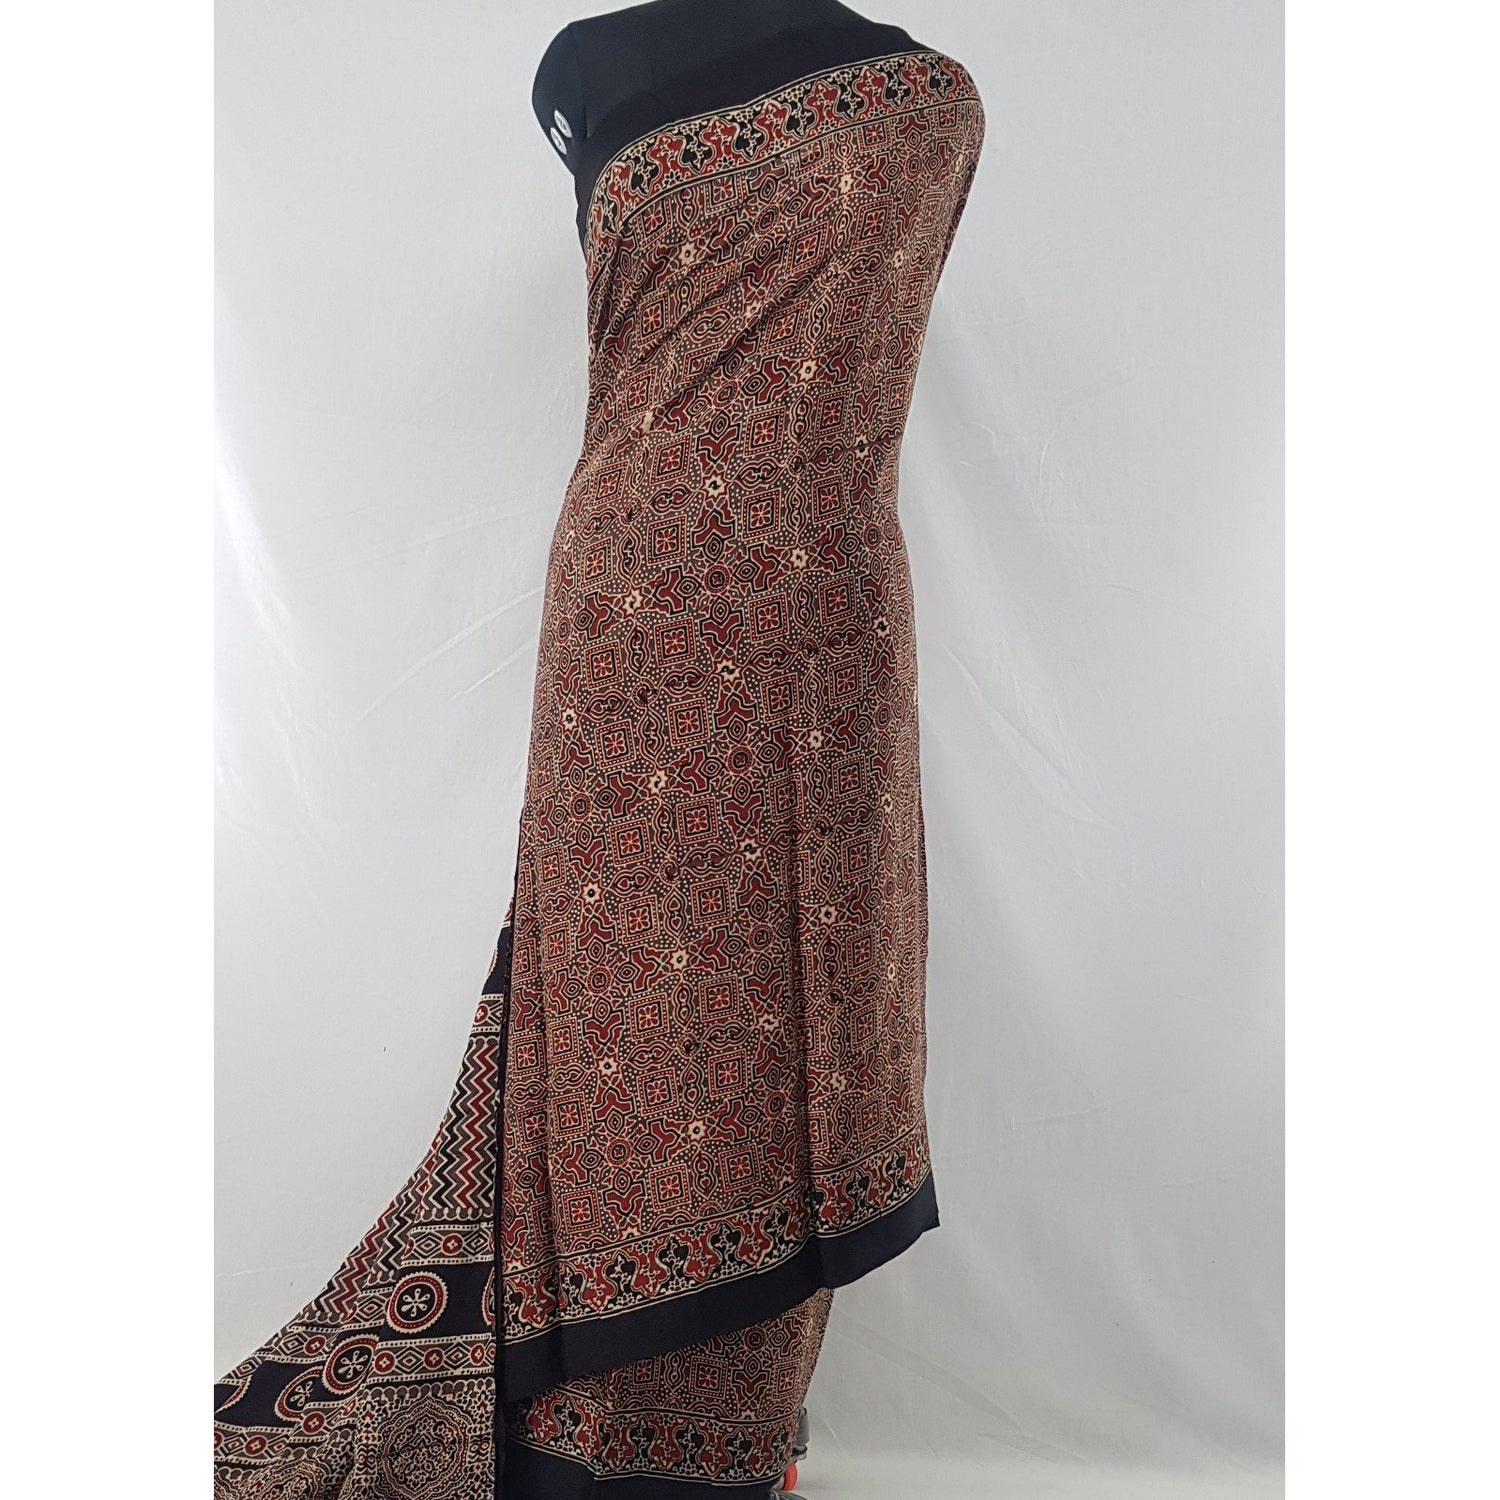 Ajrakh hand block printed natural dyed Modal Silk saree with Tassels - Vinshika